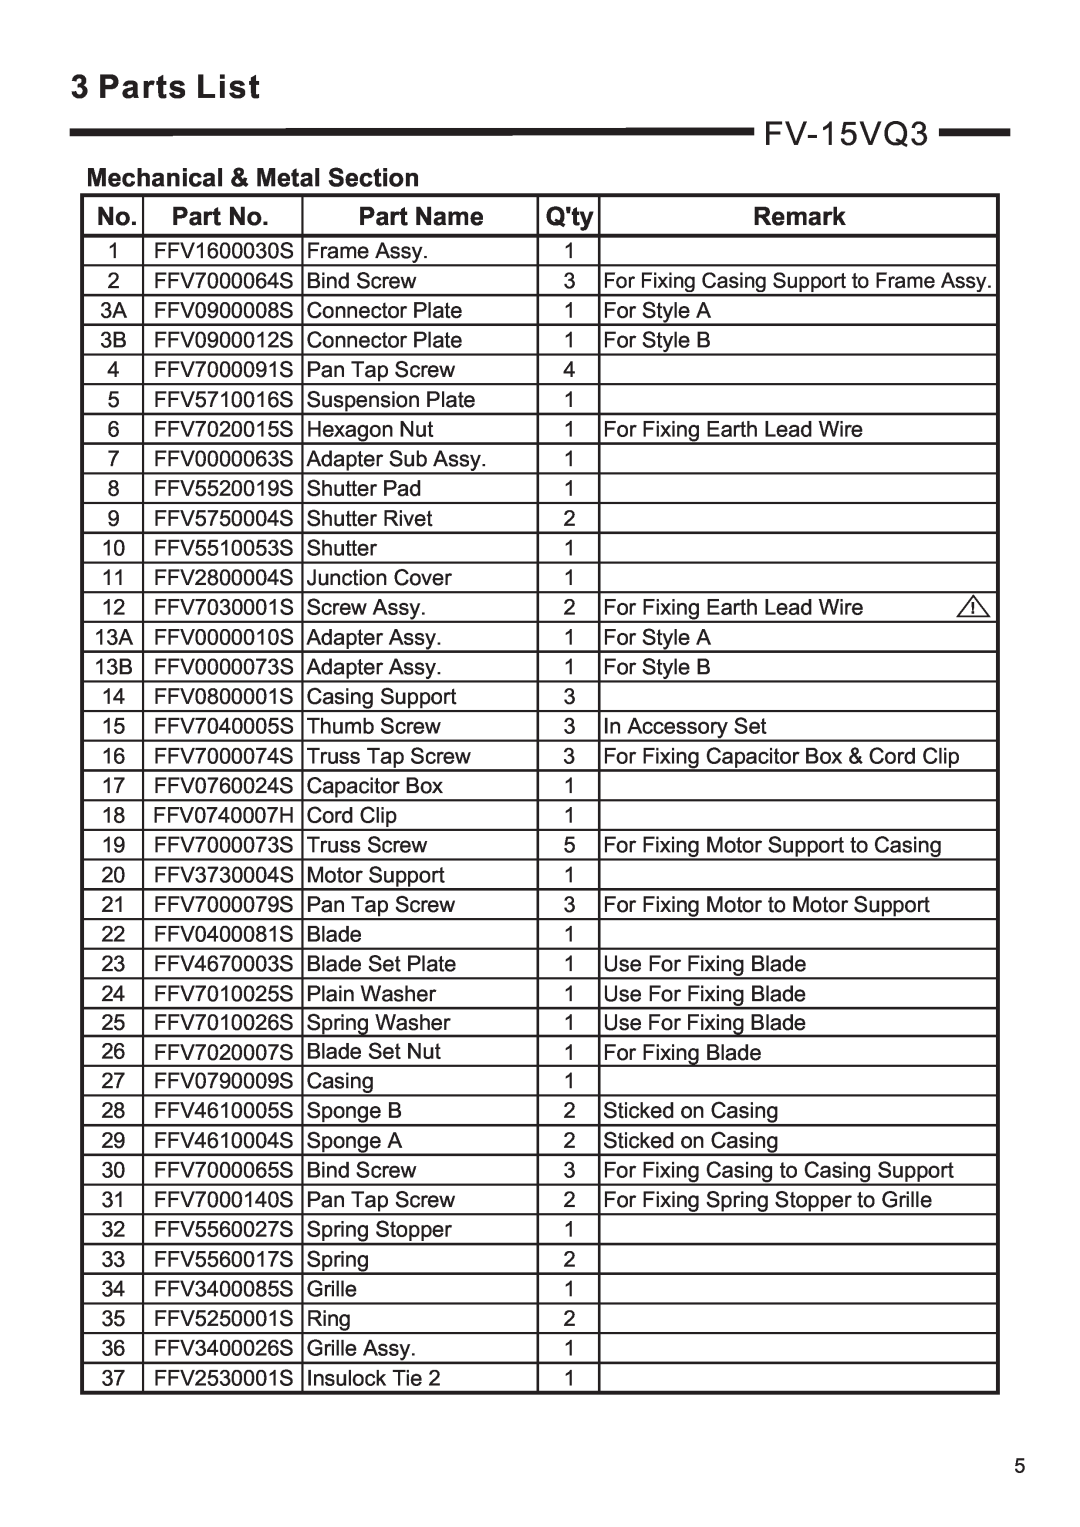 Panasonic FV-15VQ3, FV-20/30/40VQ3 service manual Parts List, Mechanical & Metal Section, Part Name, Remark 